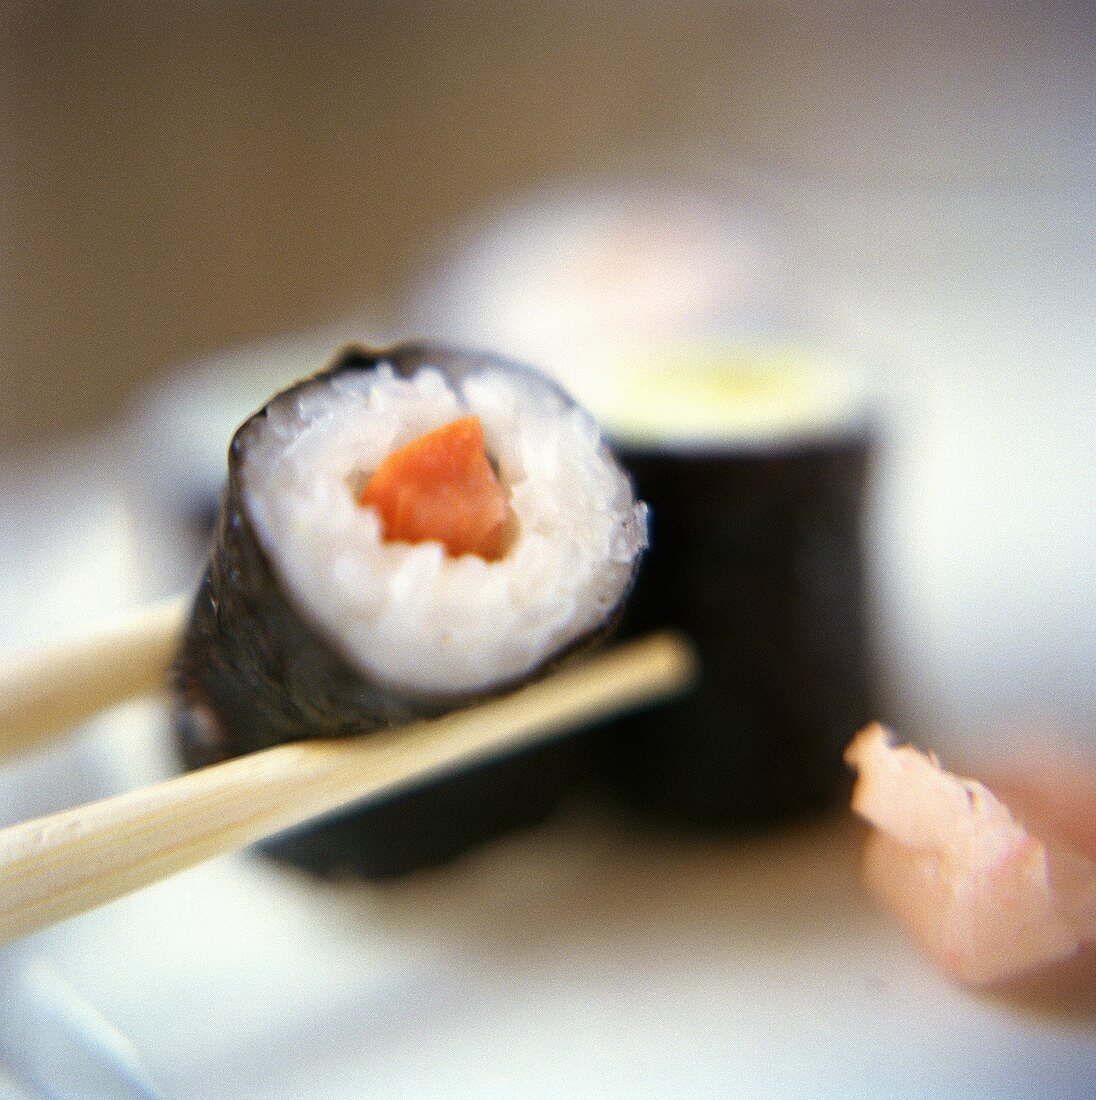 Chopsticks Holding a Maki Sushi